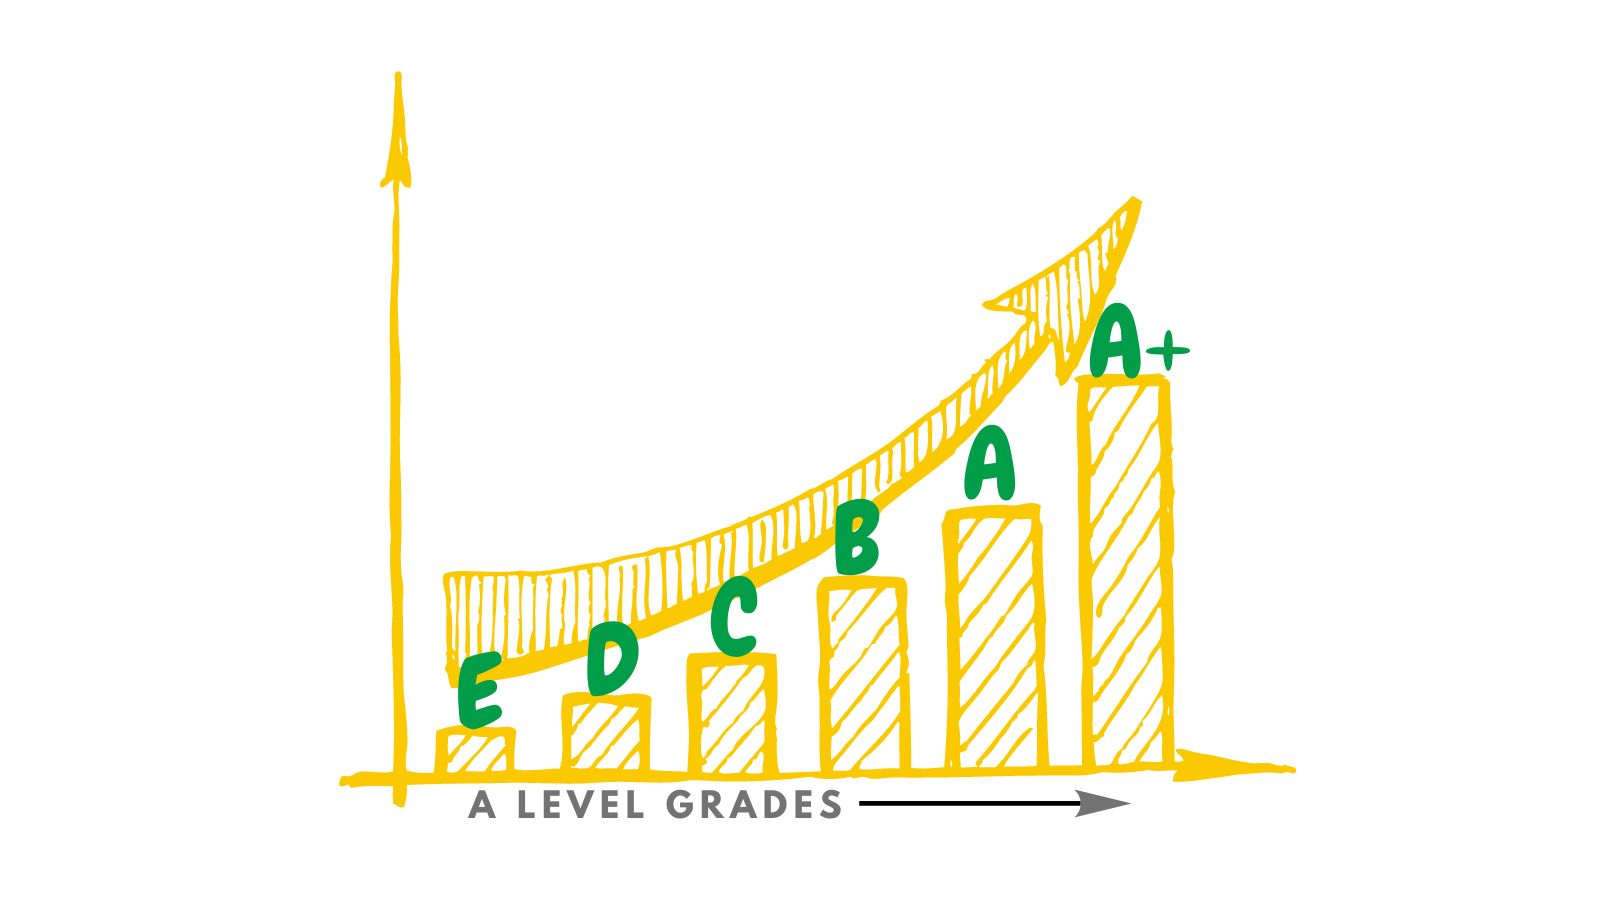 a level exam grades graph